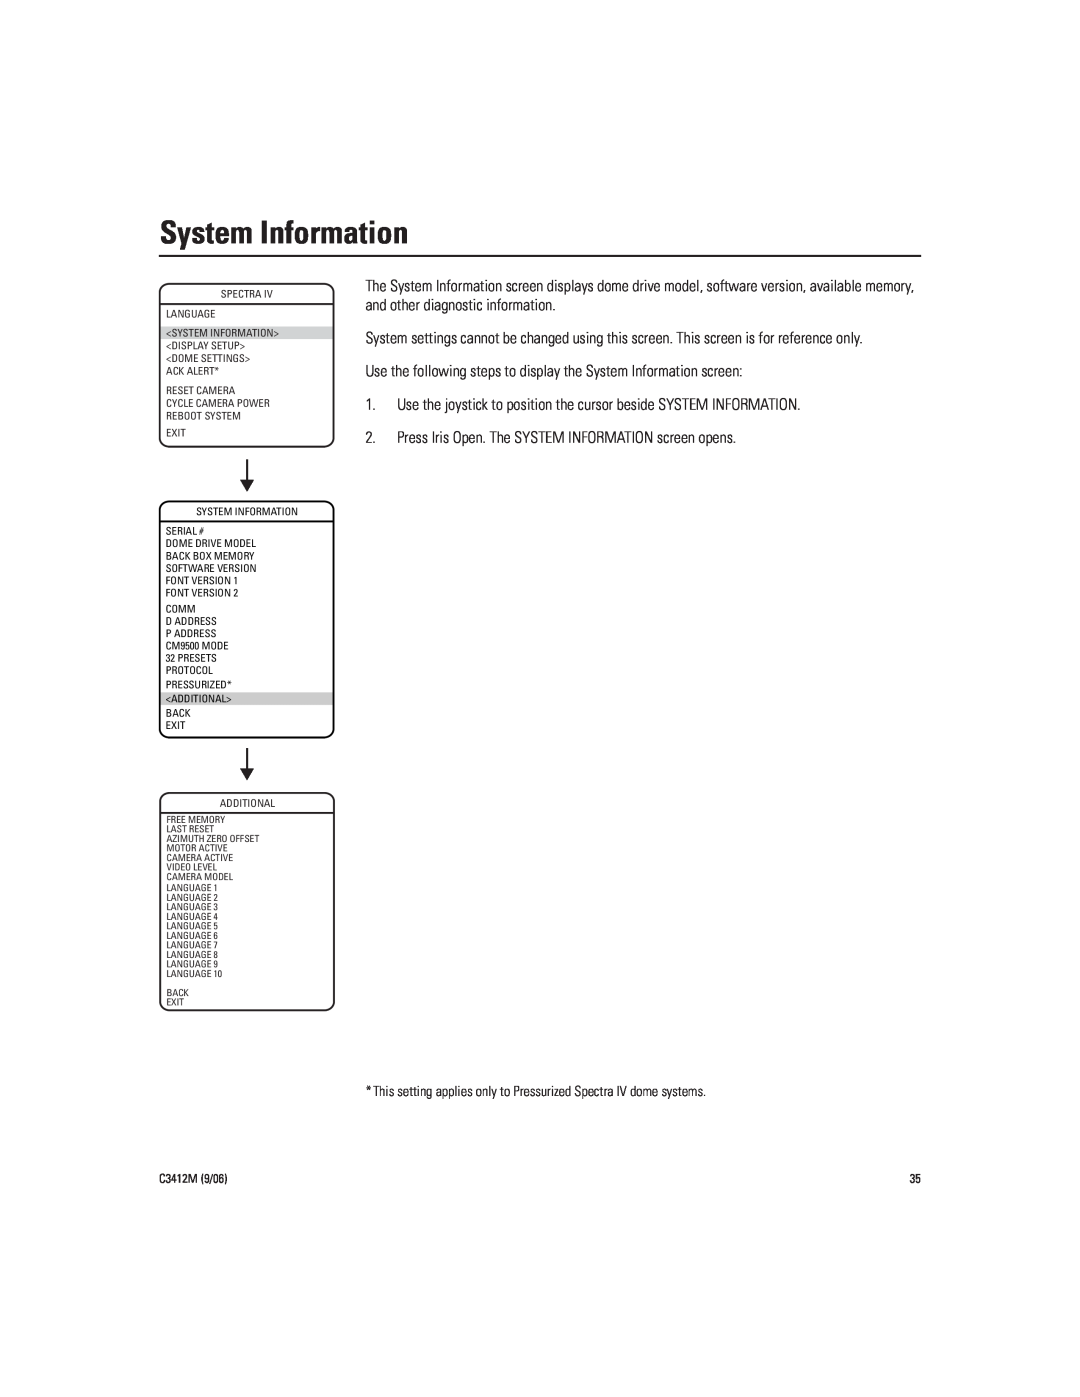 Pelco IV SE manual System Information, C3412M 9/06 